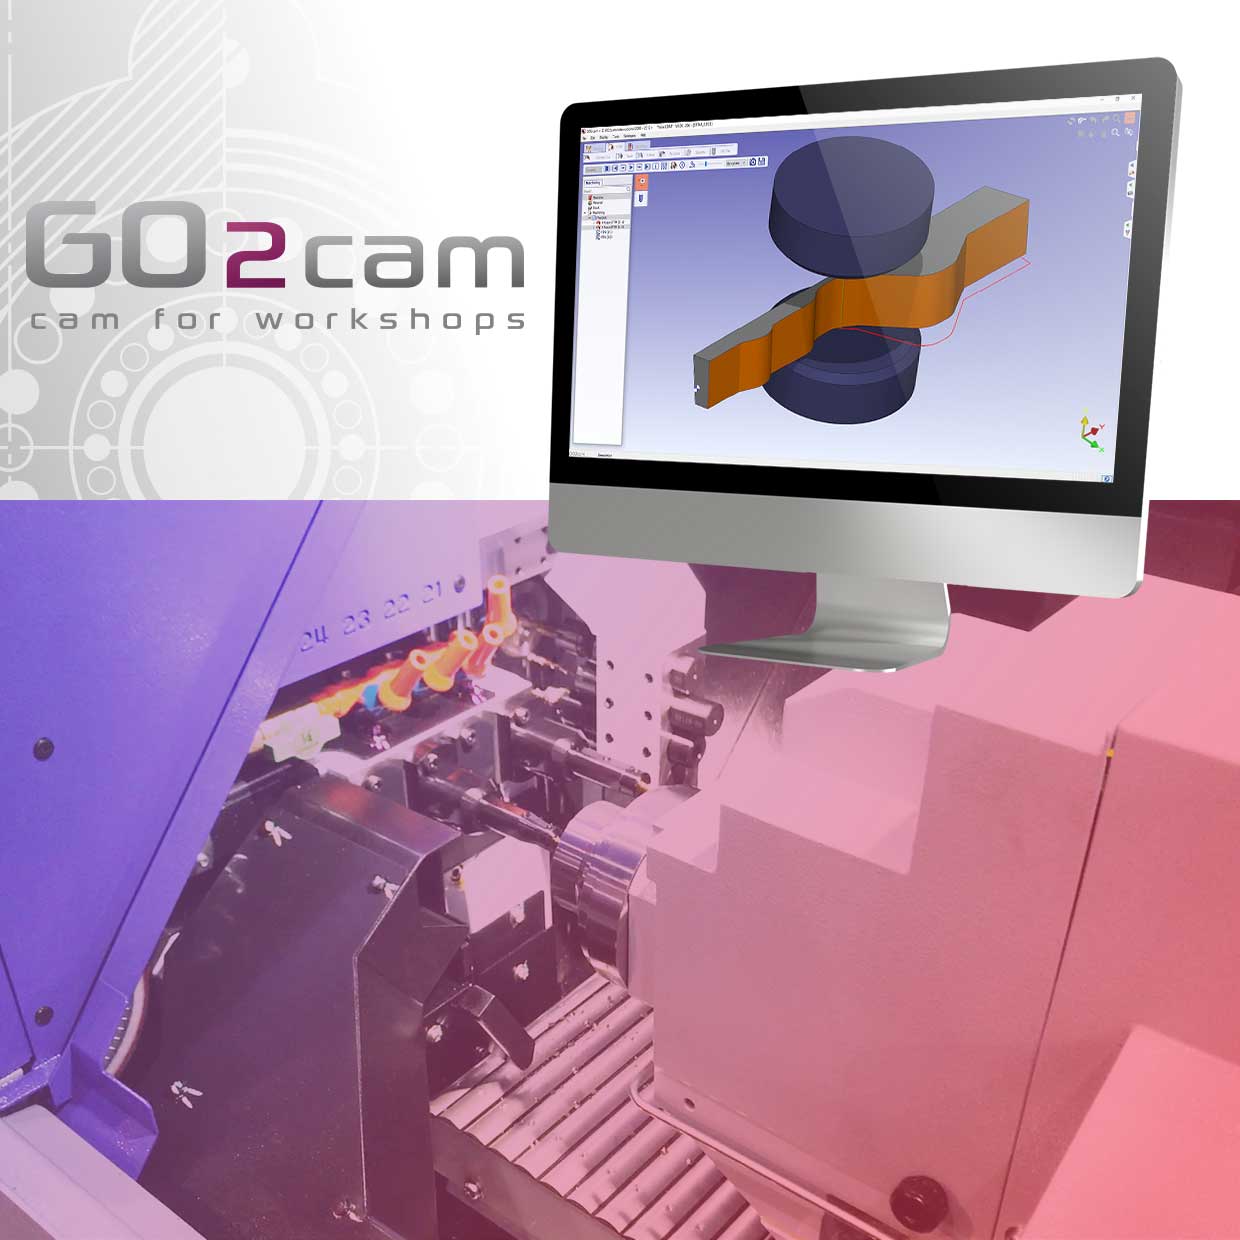 GO2cam Swissturn tool manufacturing